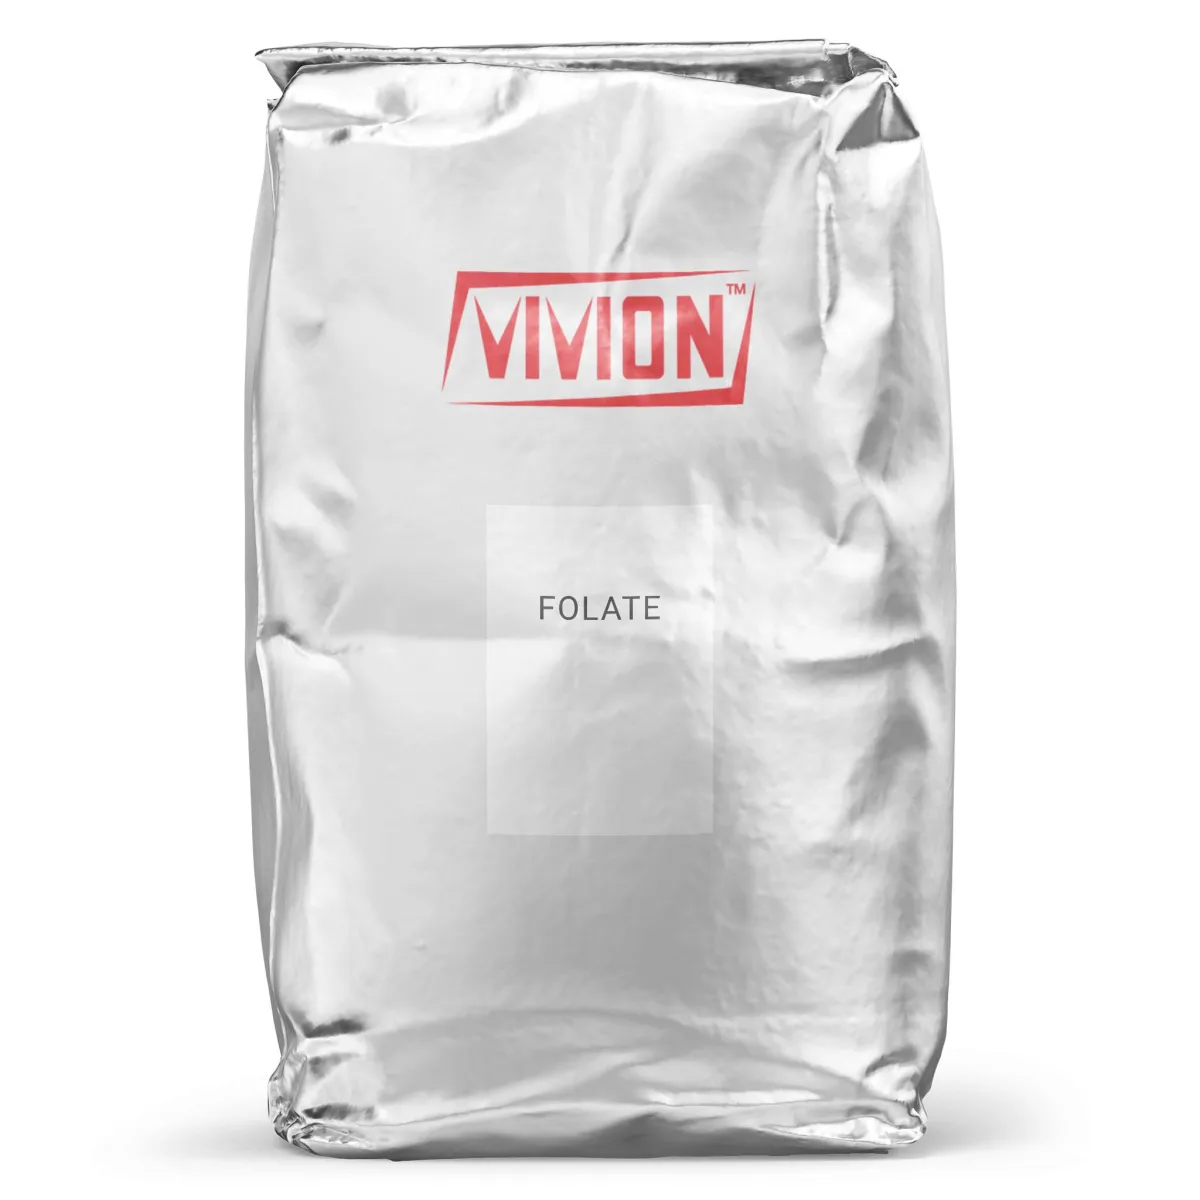 Bag of Vivion's wholesale Folate.